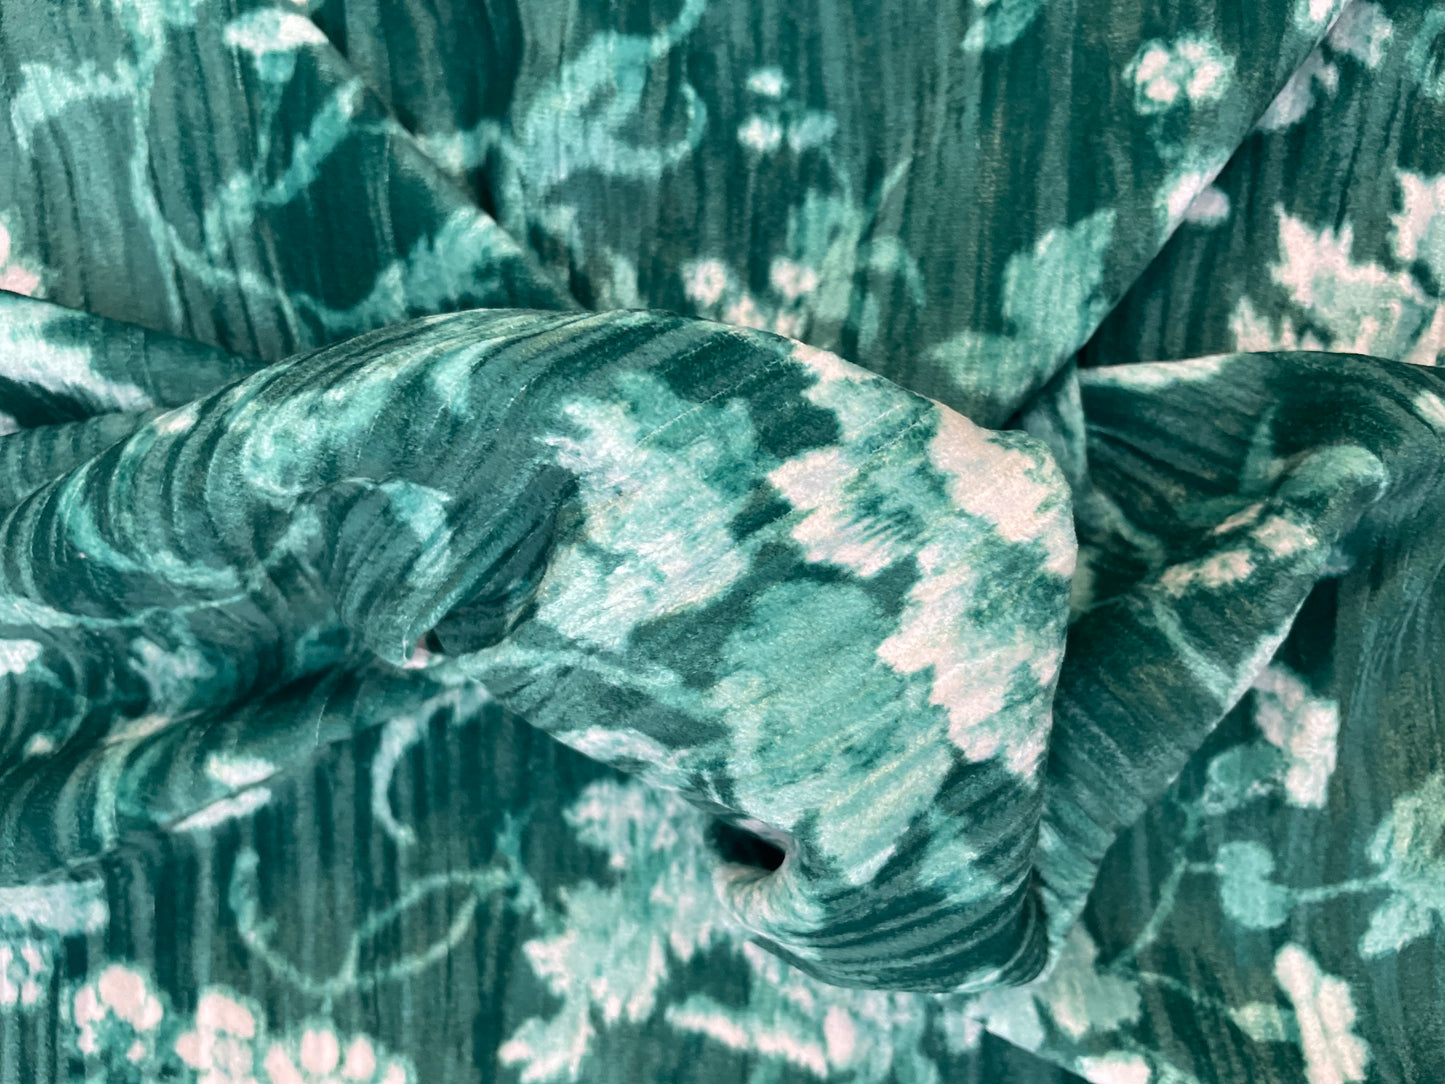 Italian Textured Floral Green Floral Print Velvet